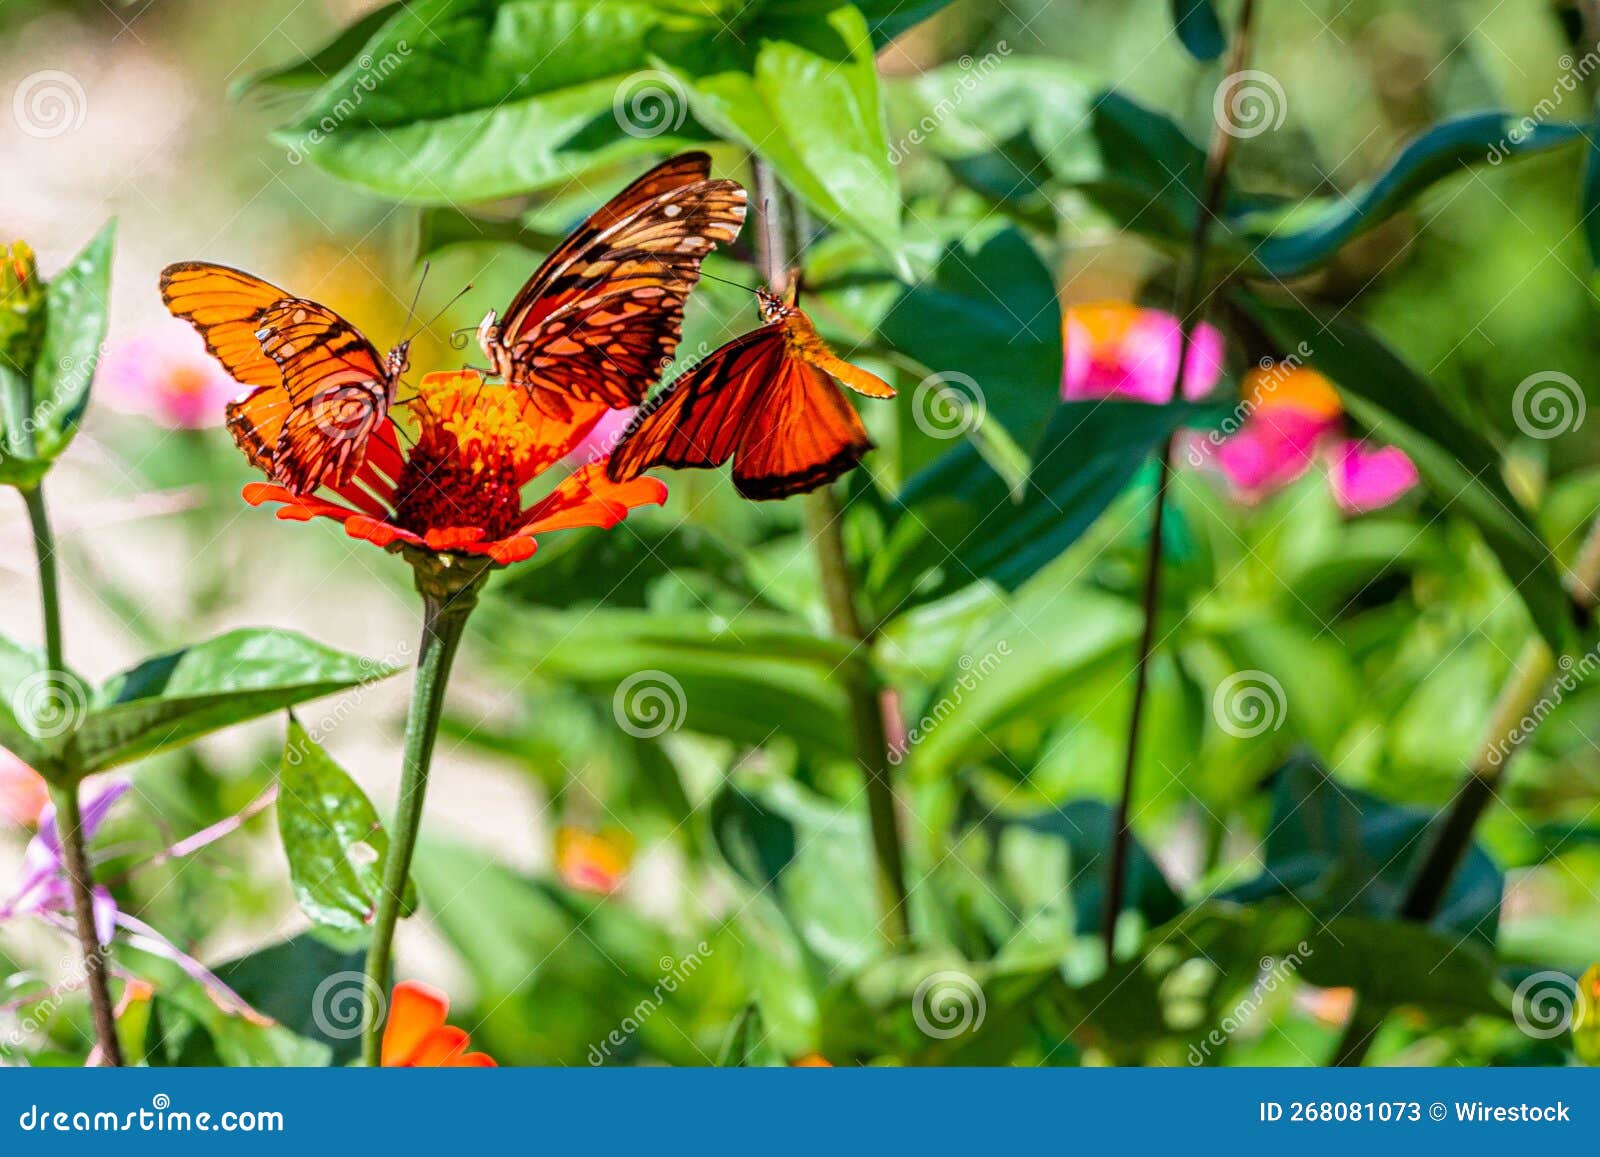 selective shot of mexican silverspot (dione moneta) butterflies  on a flower in a garden